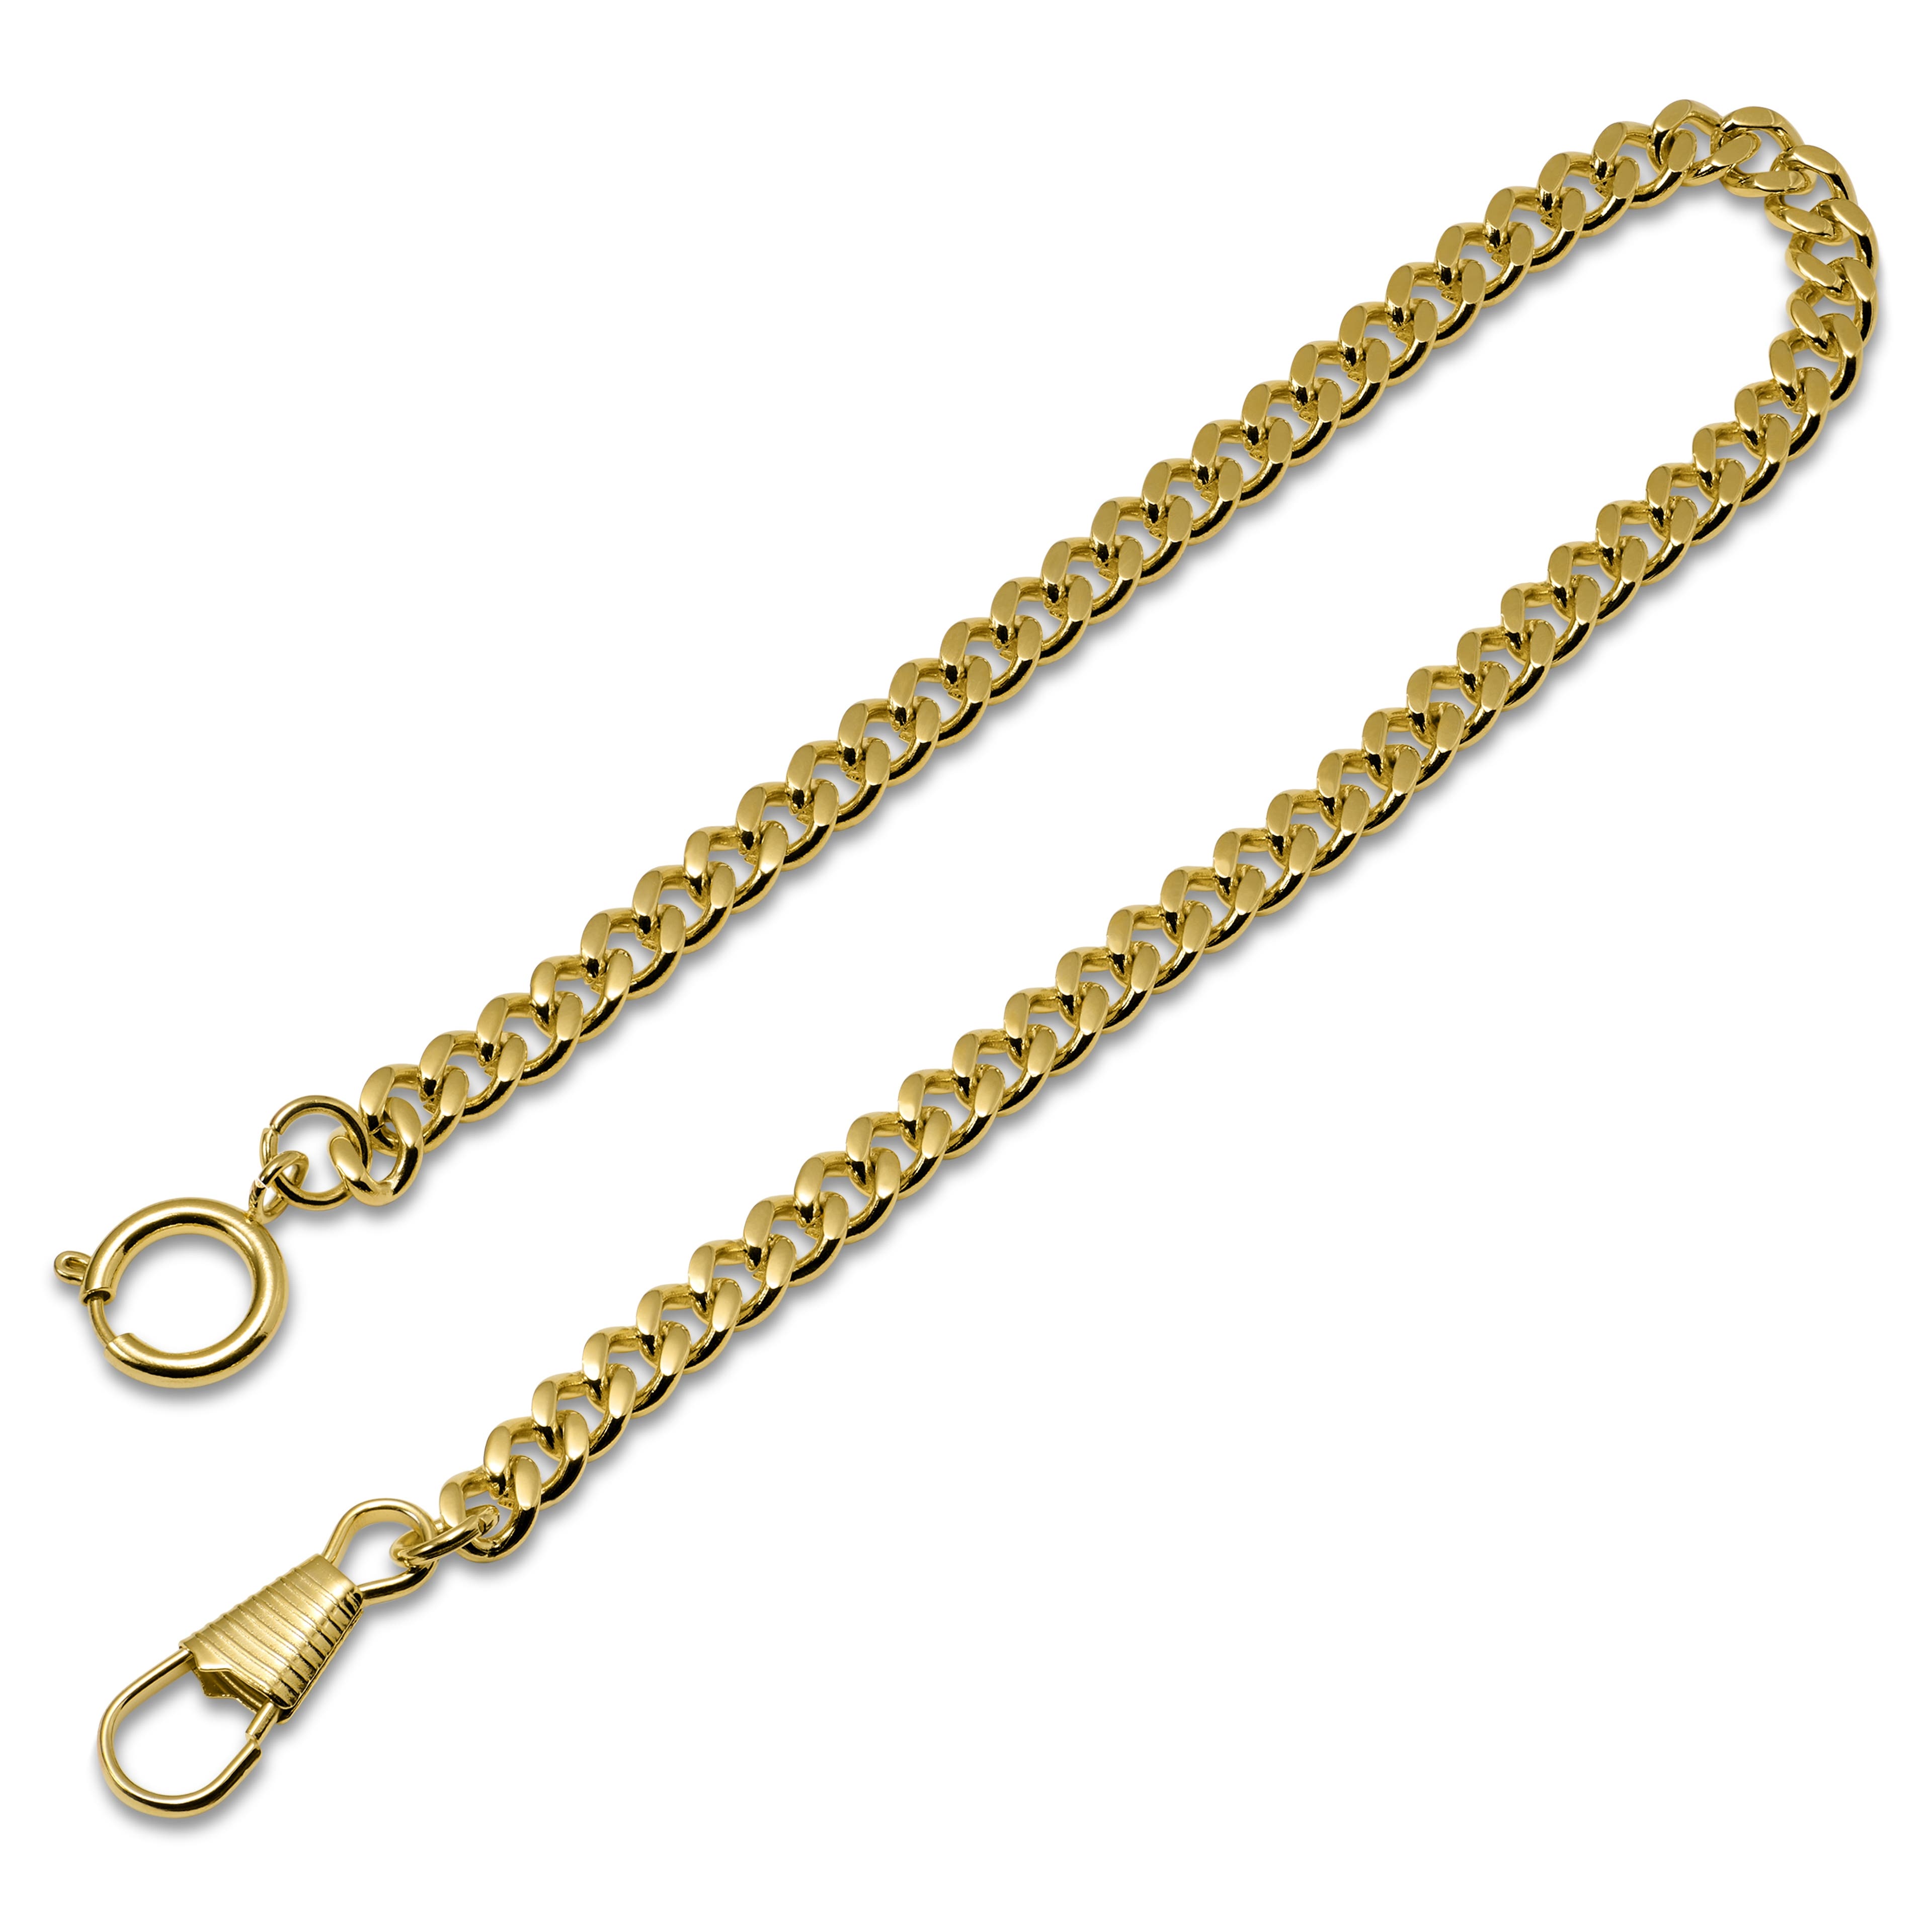 Cadena para reloj de bolsillo con anillo de resorte de acero dorada